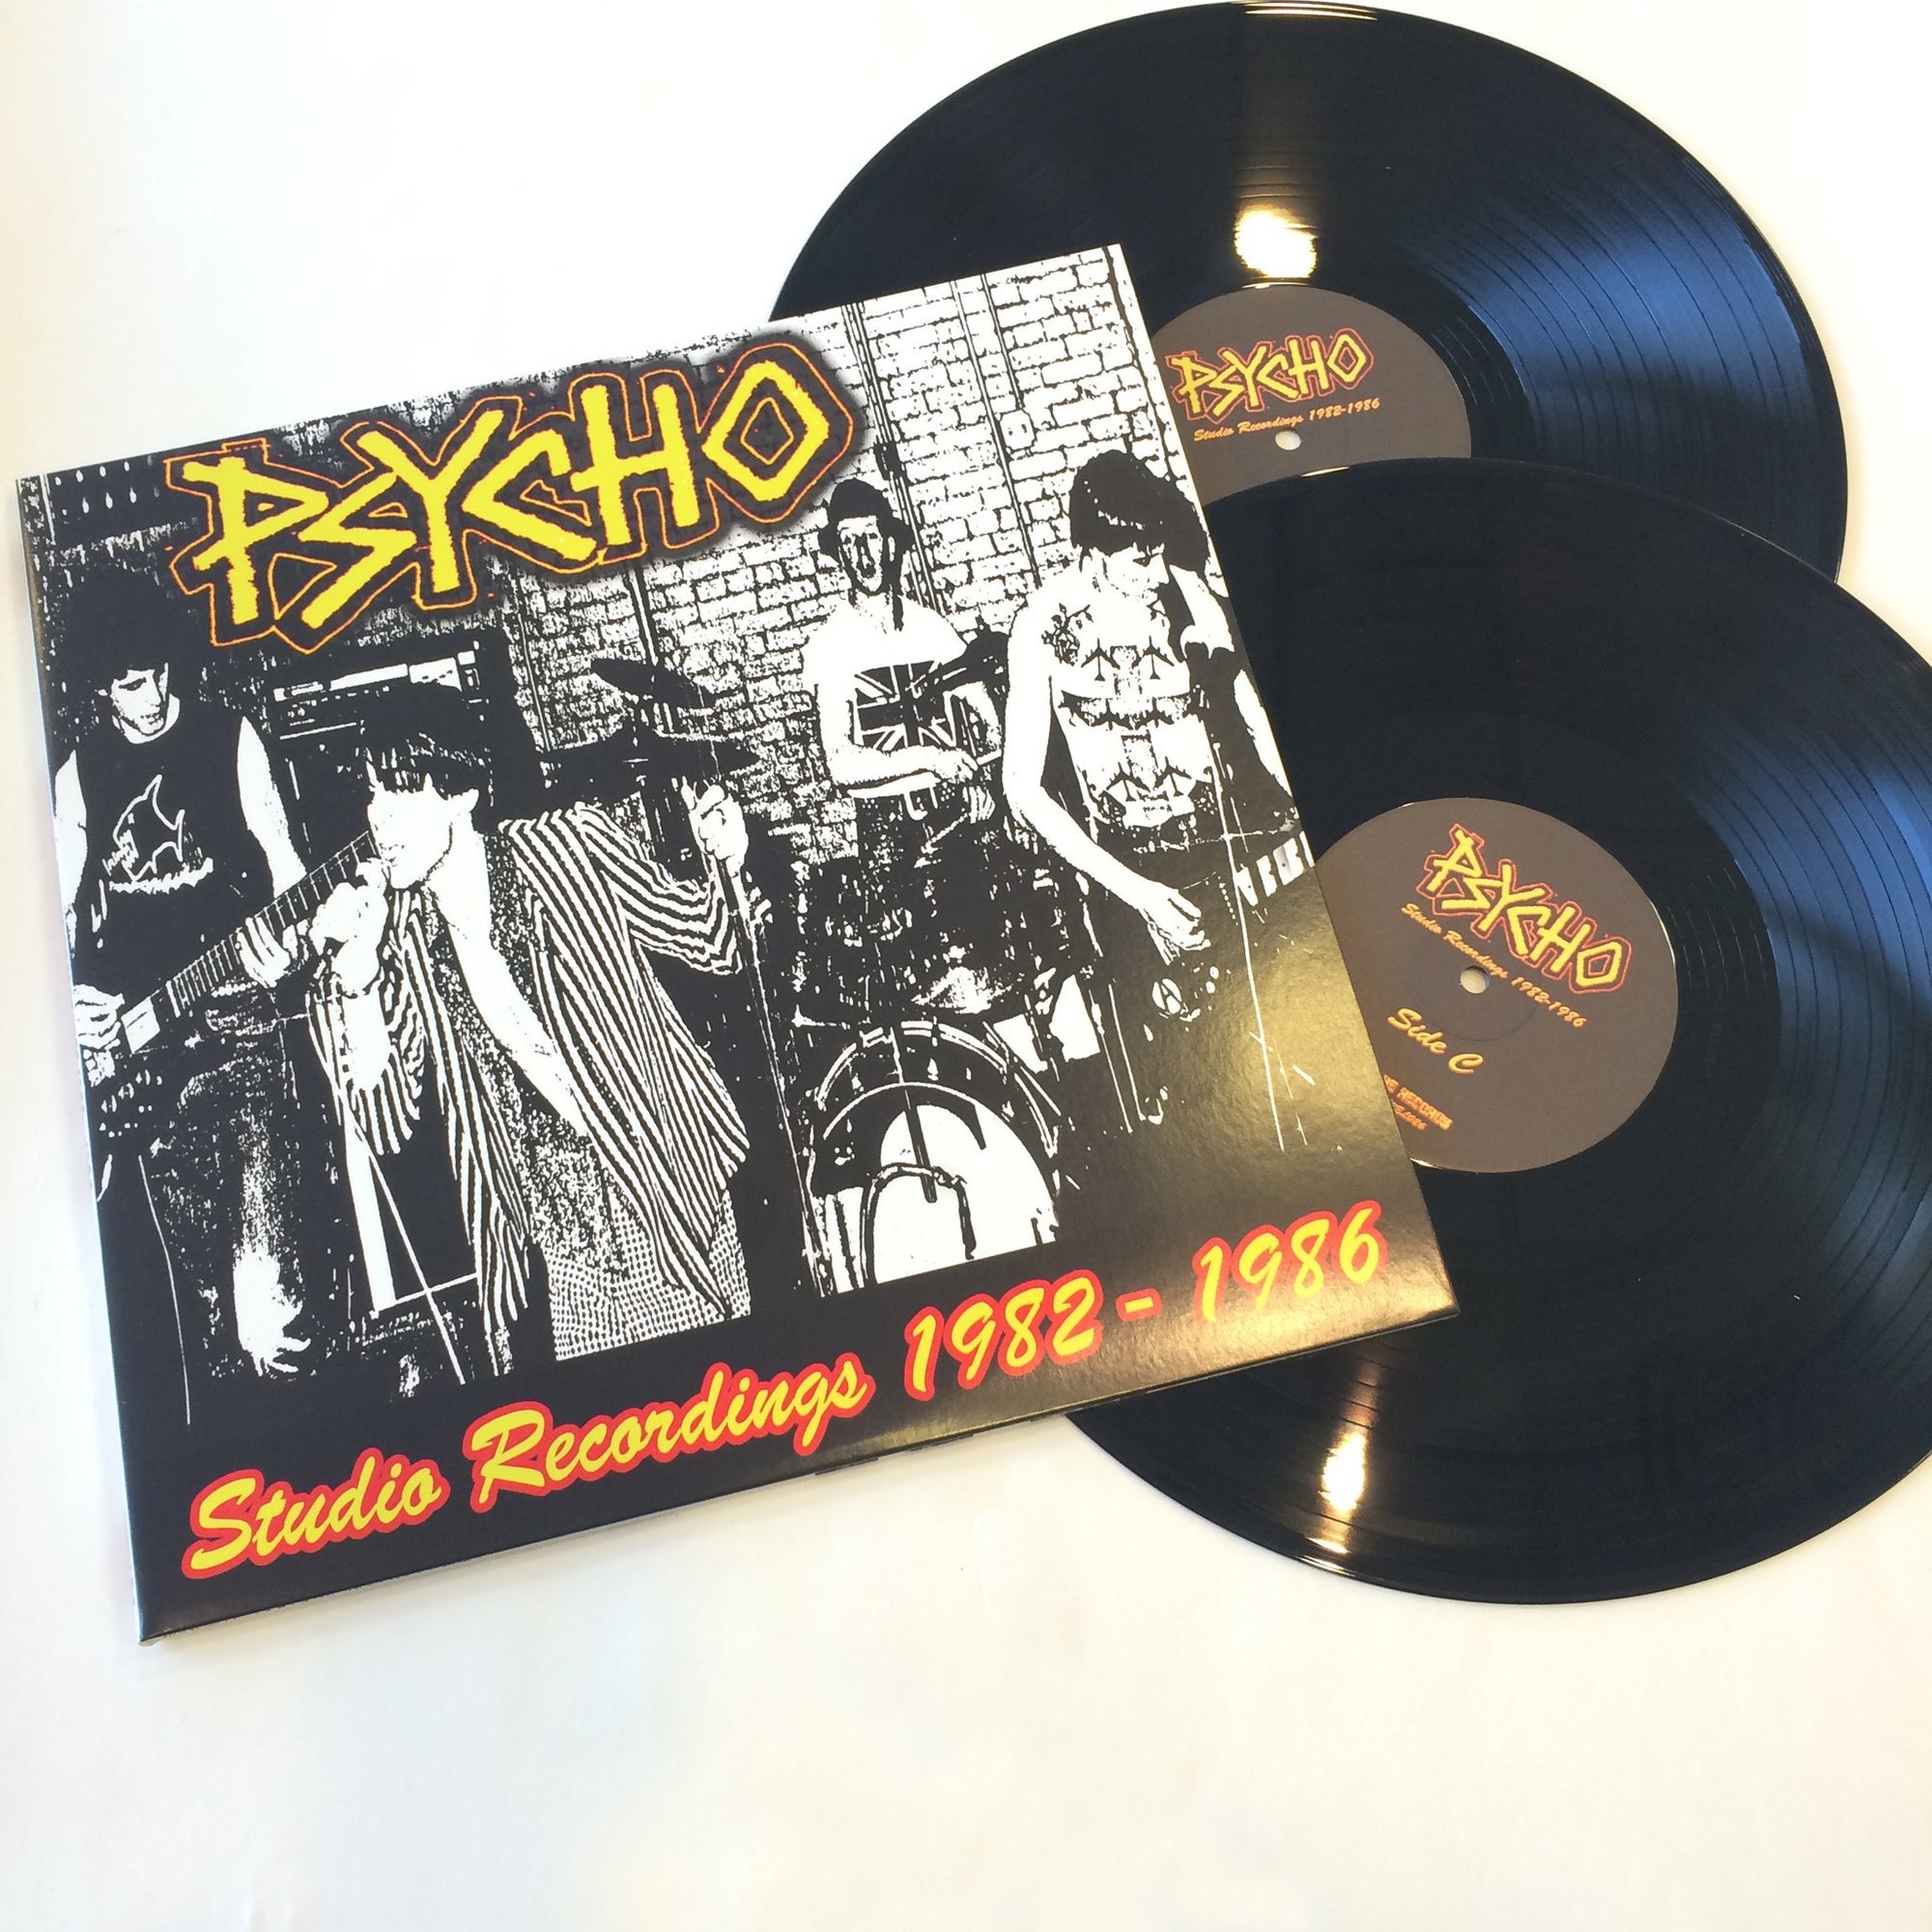 Psycho- Studio Recordings 1982 - 1986 2x LP GATEFOLD ~REISSUE! - Welfare Records - Dead Beat Records - 1